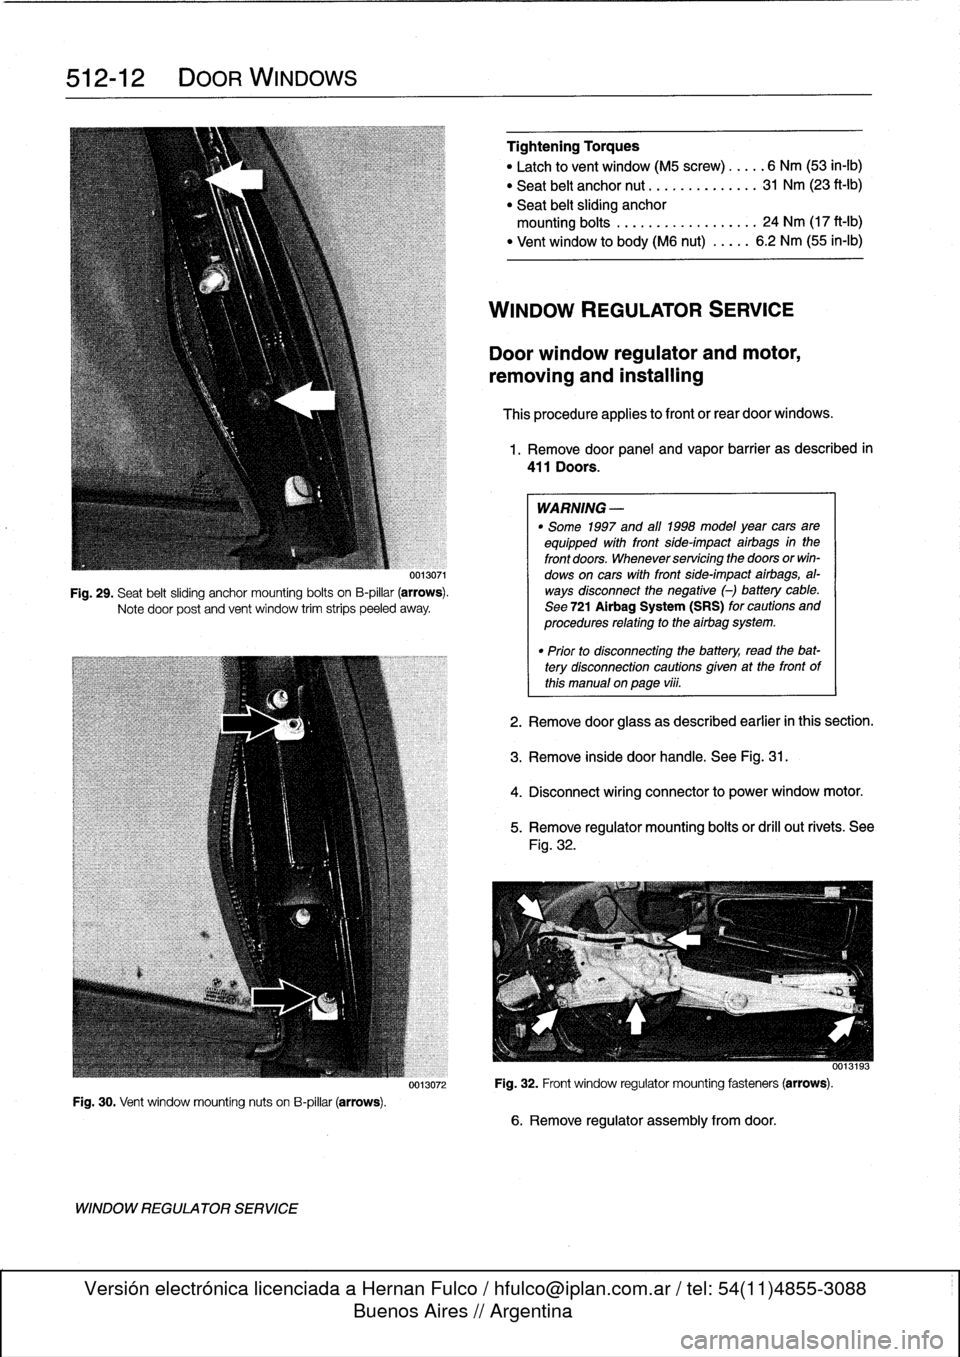 BMW 318i 1997 E36 Owners Manual 
512-
1
2

	

DOOR
WINDOWS

Fig
.
30
.
Vent
window
mounting
nuts
on
B-pillar
(arrows)
.

WINDOW
REGULATOR
SERVICE

0013071

Fig
.
29
.
Seat
belt
sliding
anchor
mounting
bolts
on
B-pillar
(arrows)
.

N